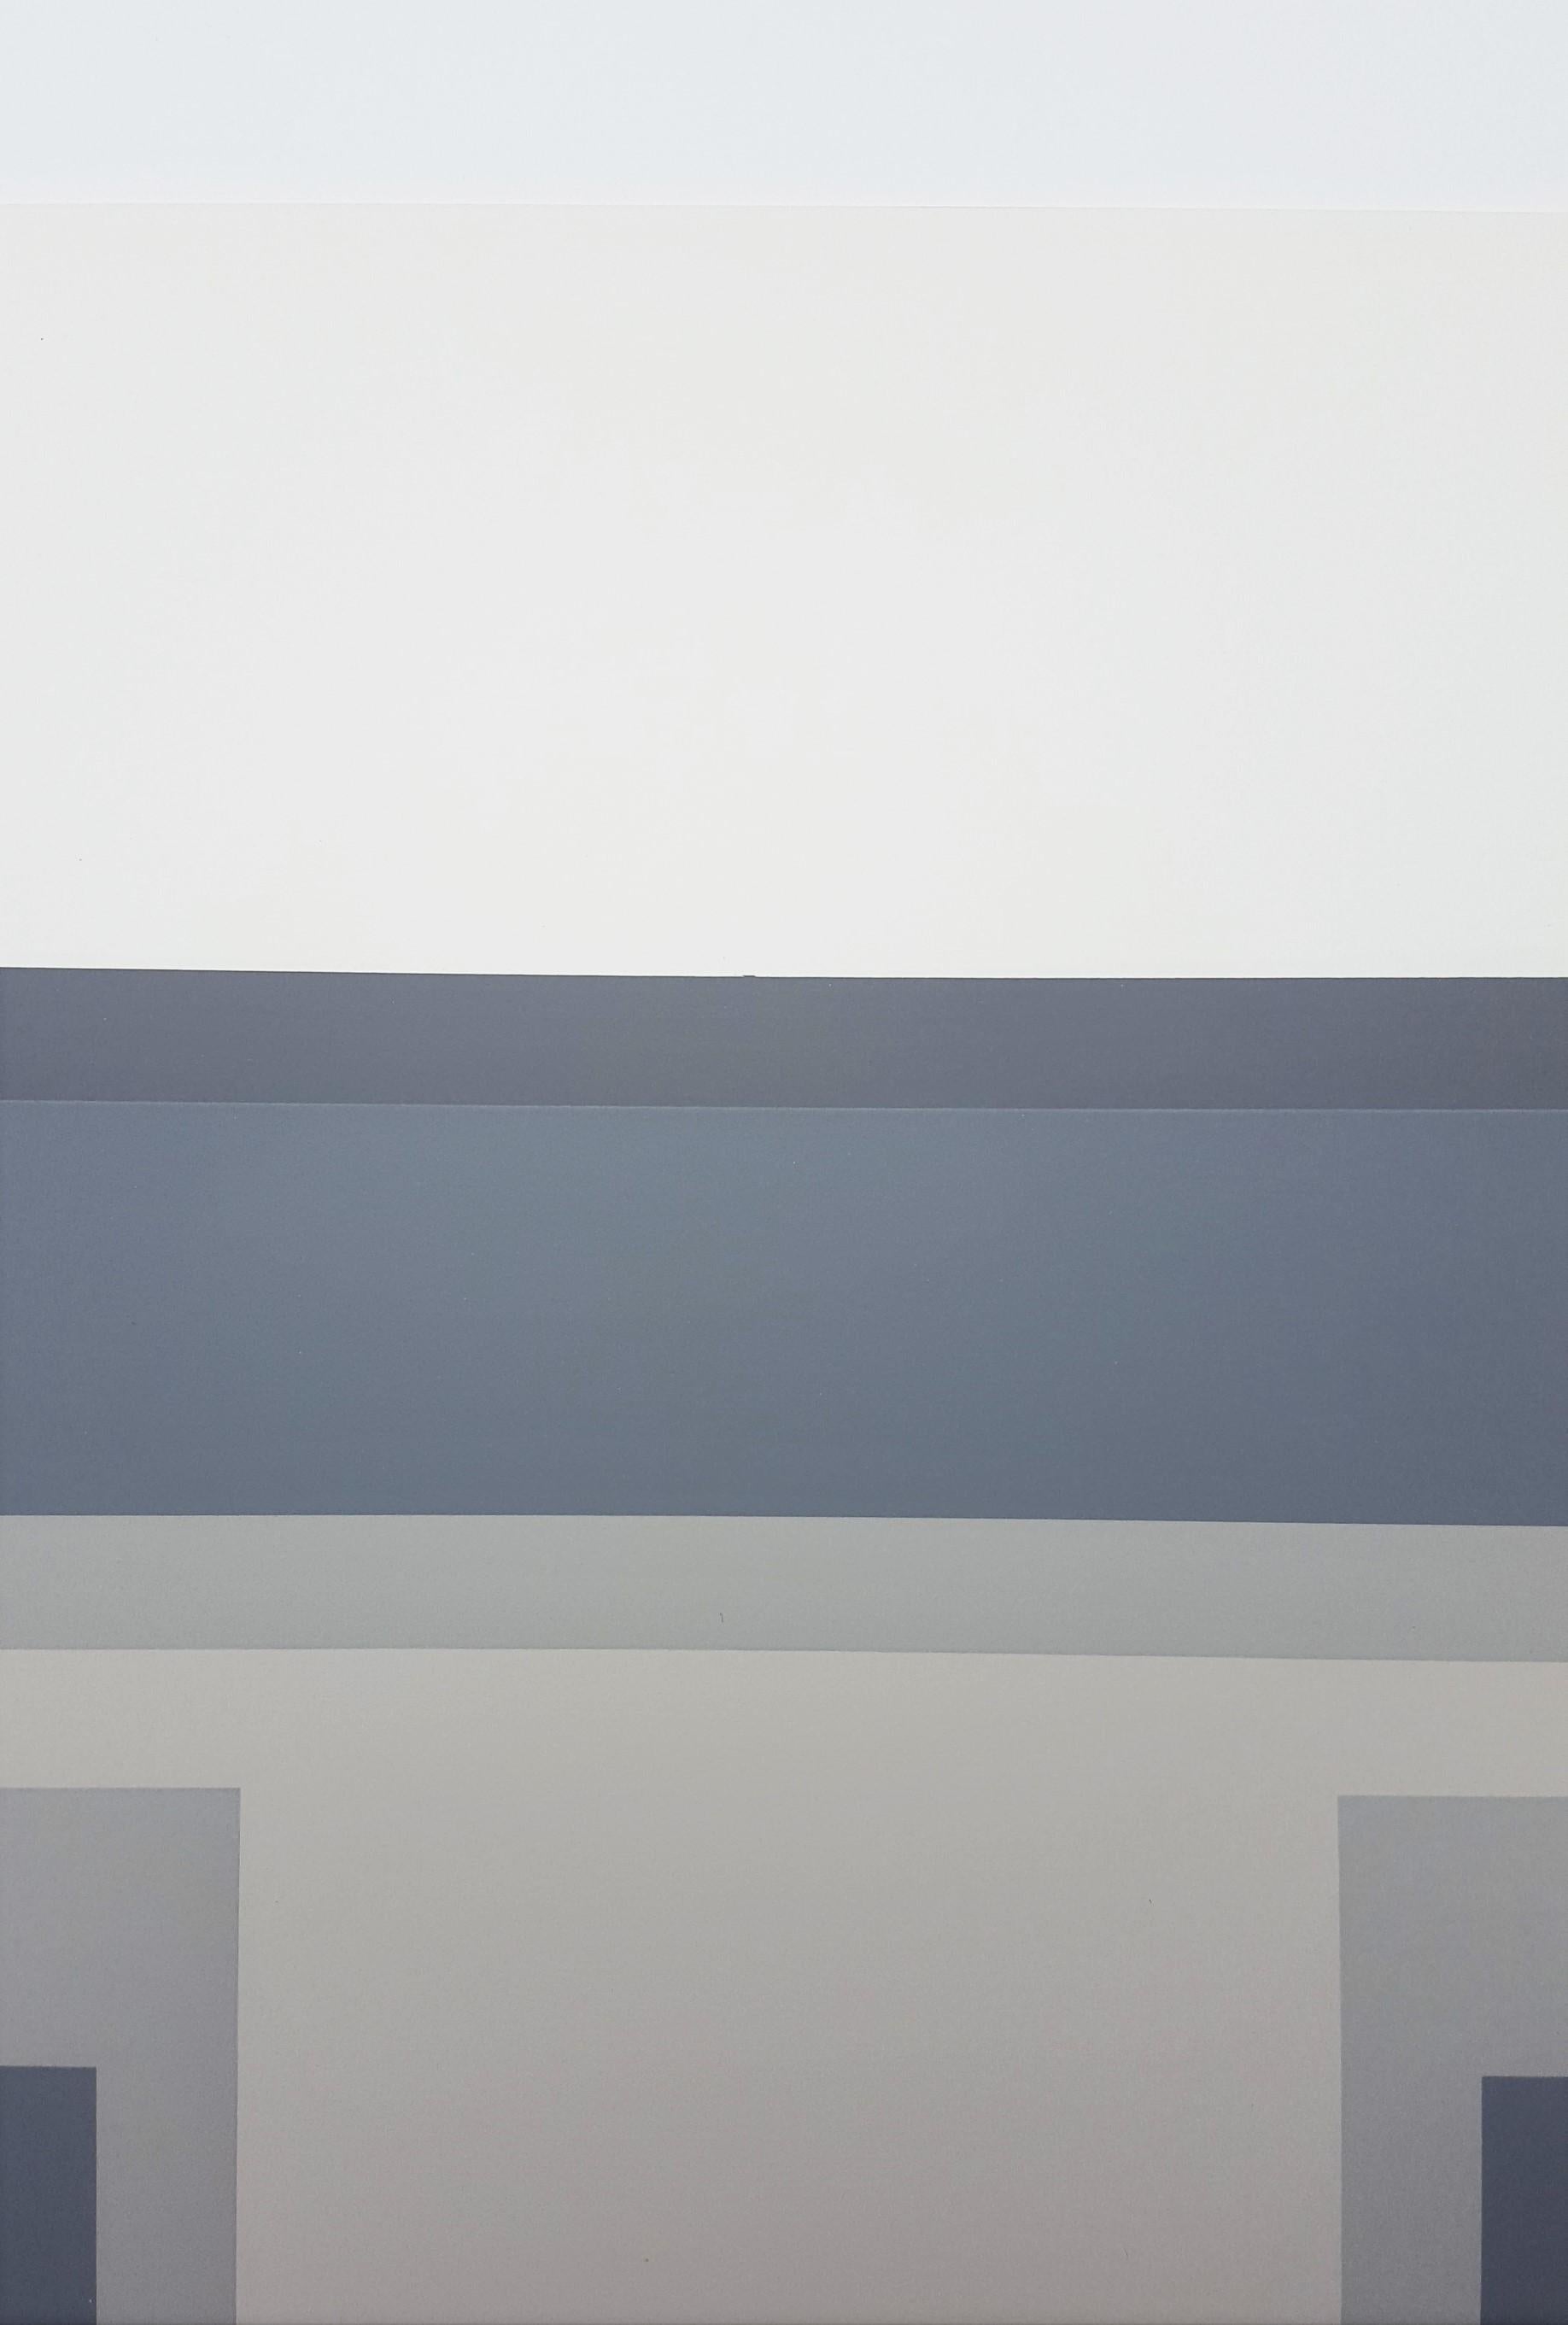 Variant III /// Bauhaus Abstract Geometric Minimalism Josef Albers Screenprint For Sale 5